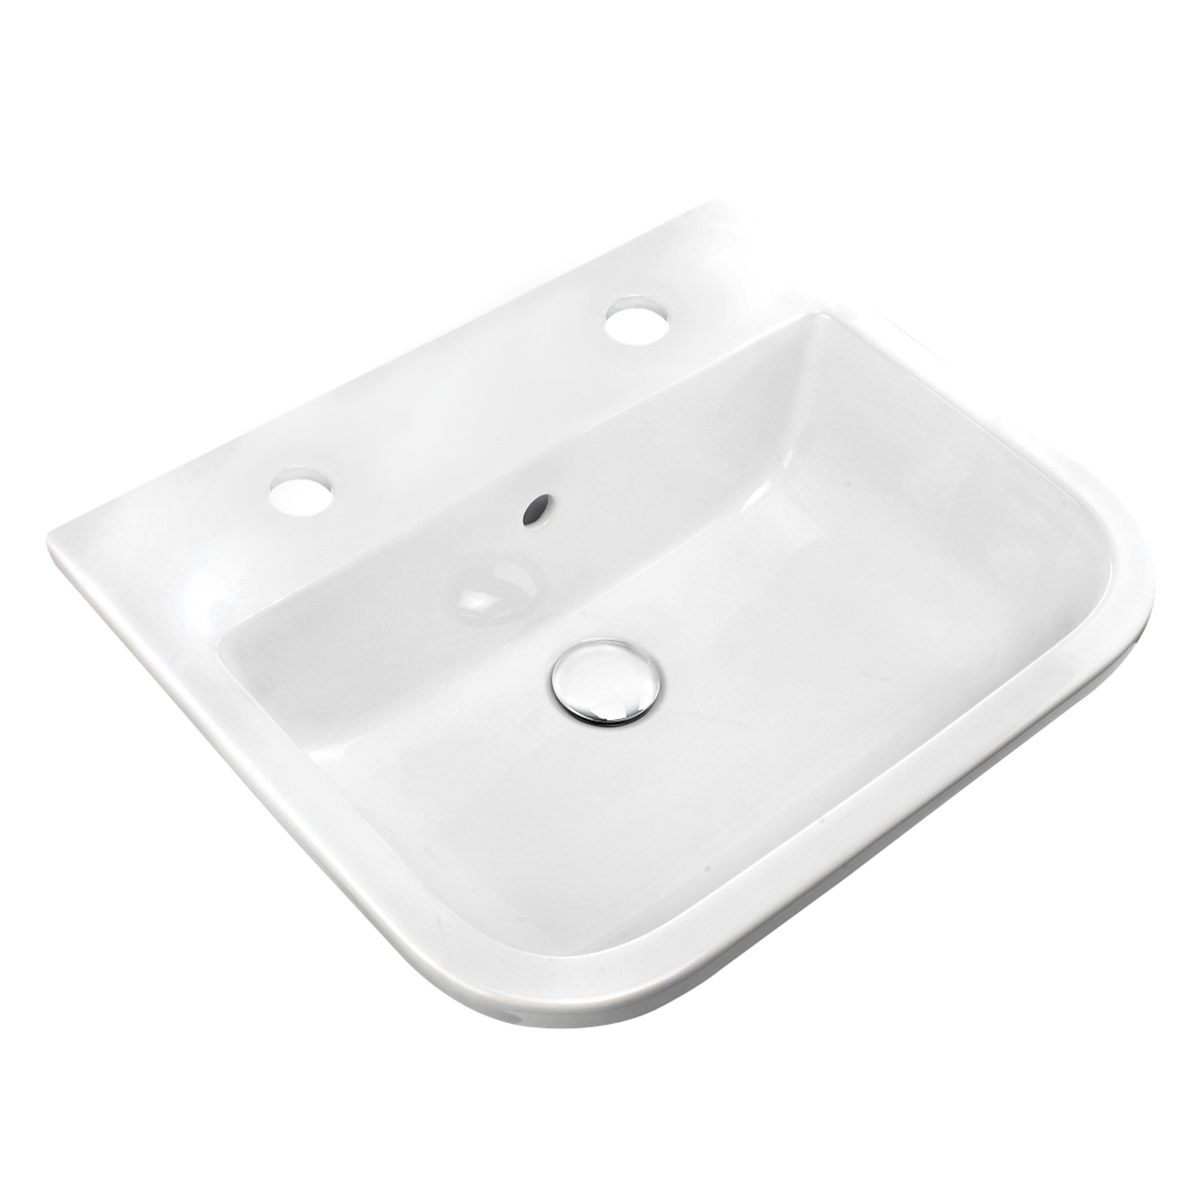 RAK Series 600 2 tap hole inset vanity bowl basin 500mm